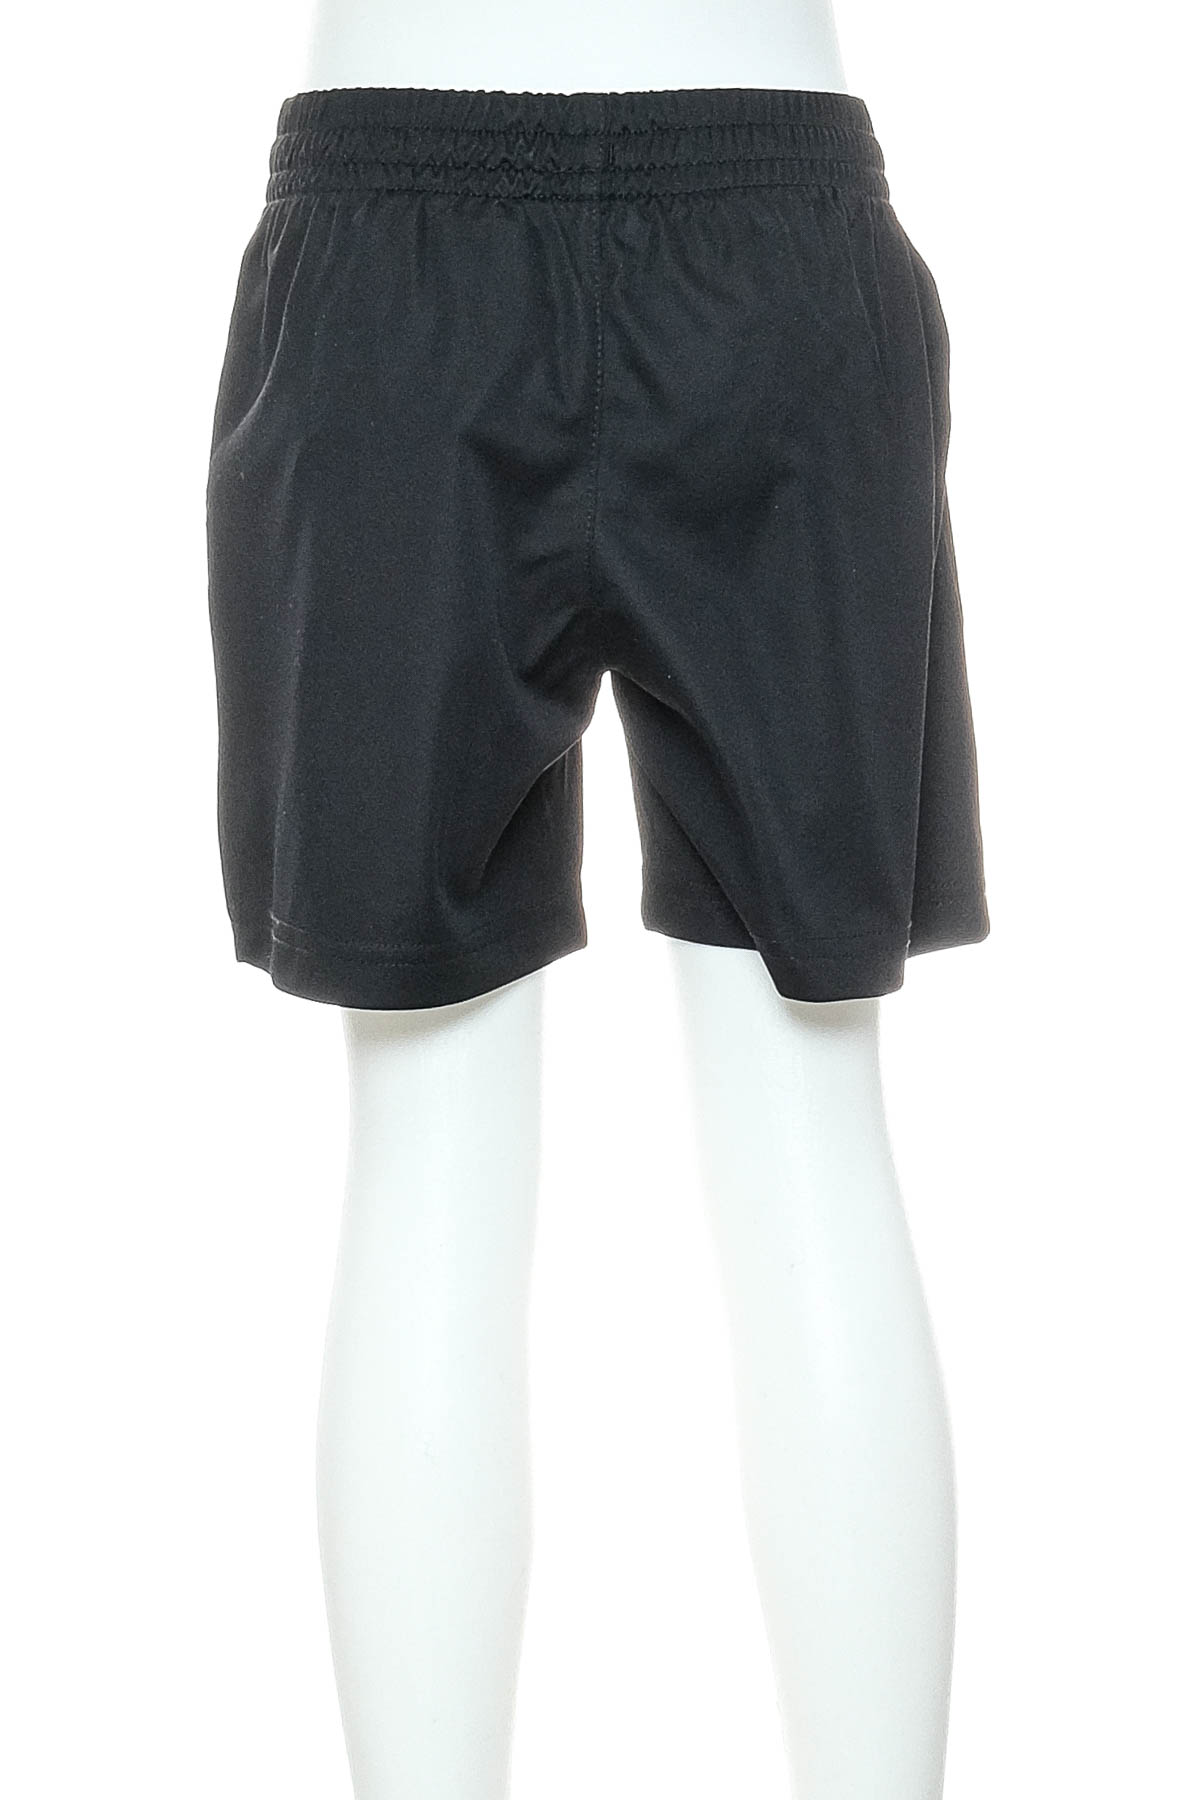 Shorts for boys - Hummel - 1